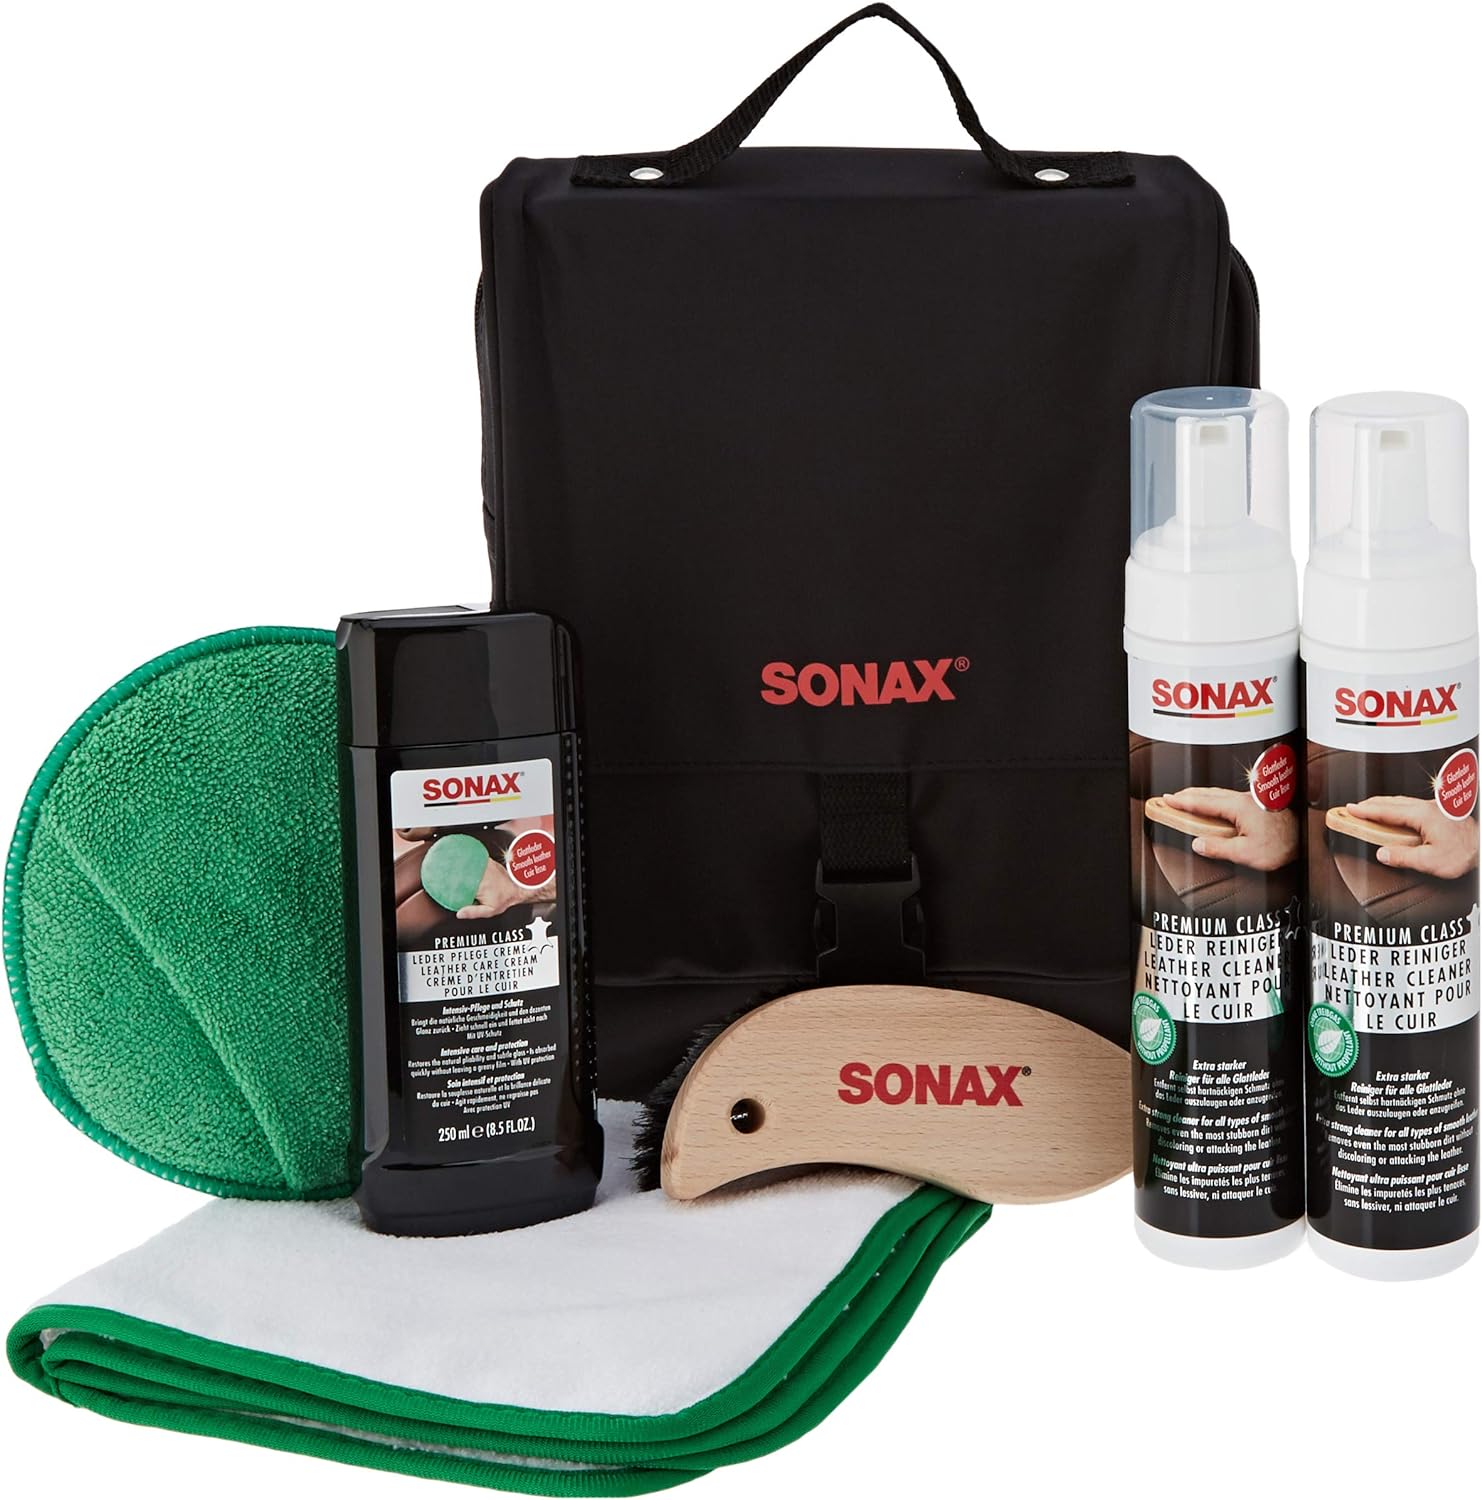 SONAX 1837855 281941 Premium Class Leather Care Set